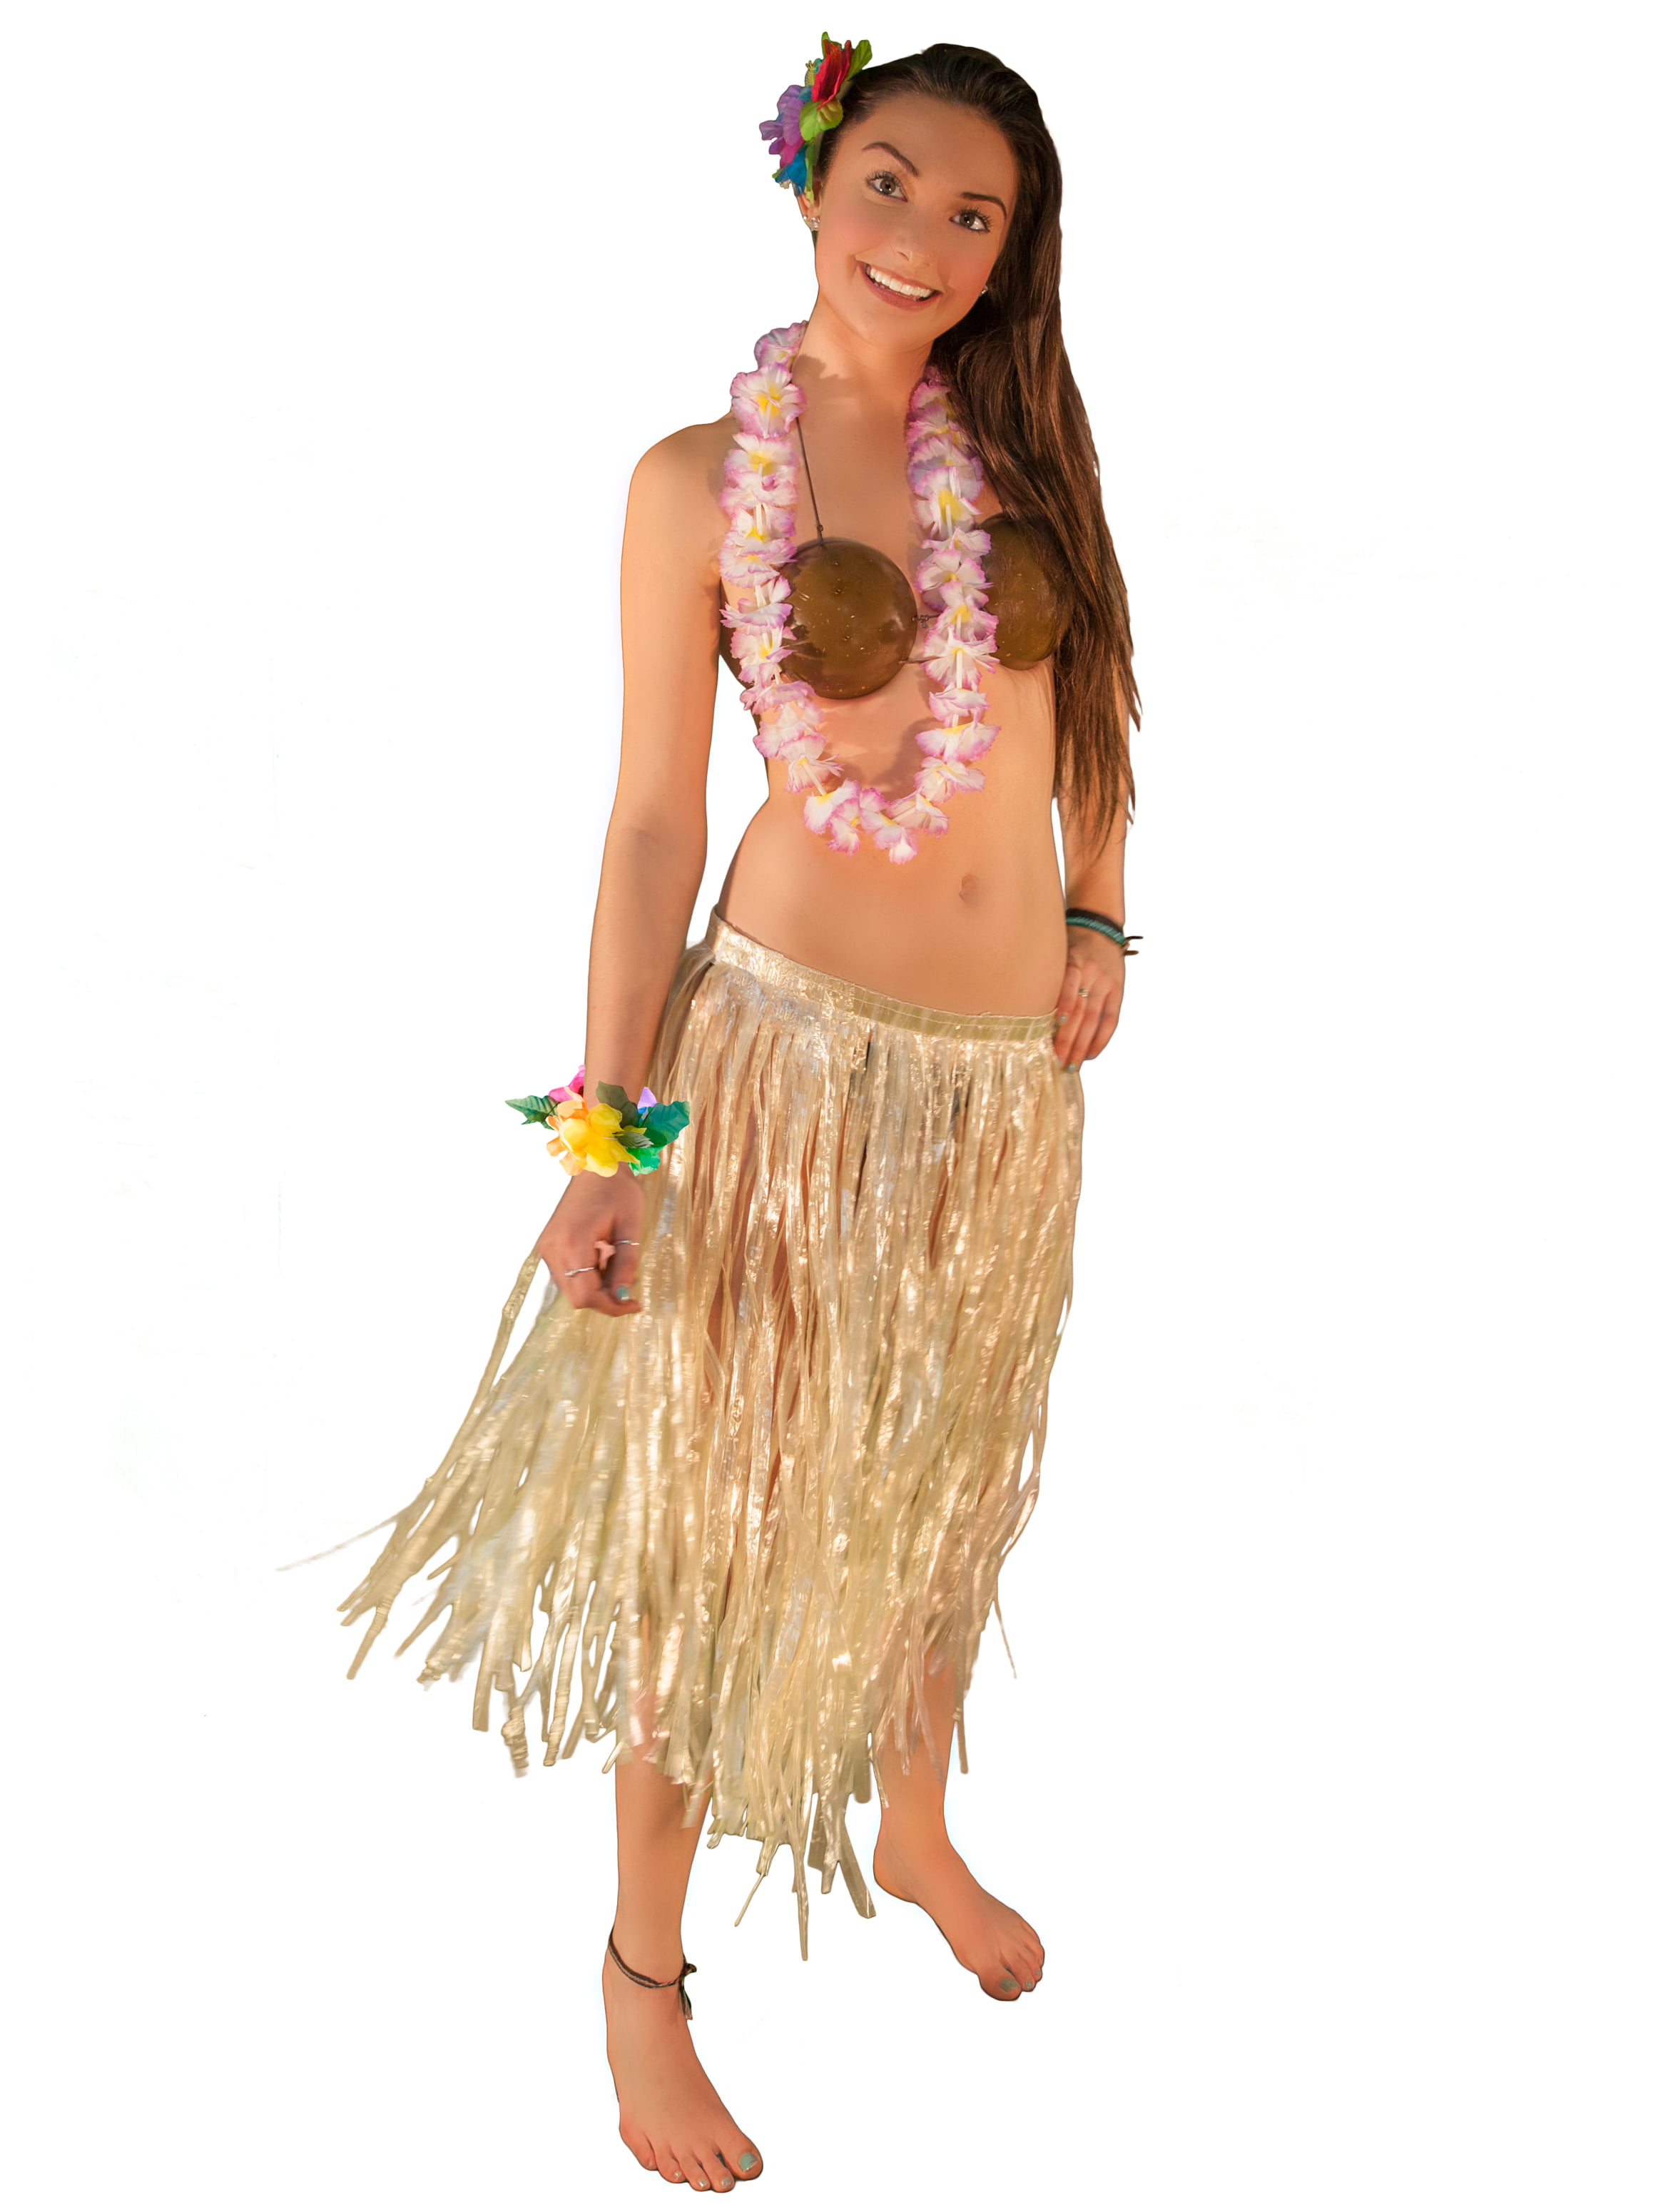 BUY 1 GET 1 FREE ADULT SIZE HULA GRASS SKIRT party costume supplies hawaiian